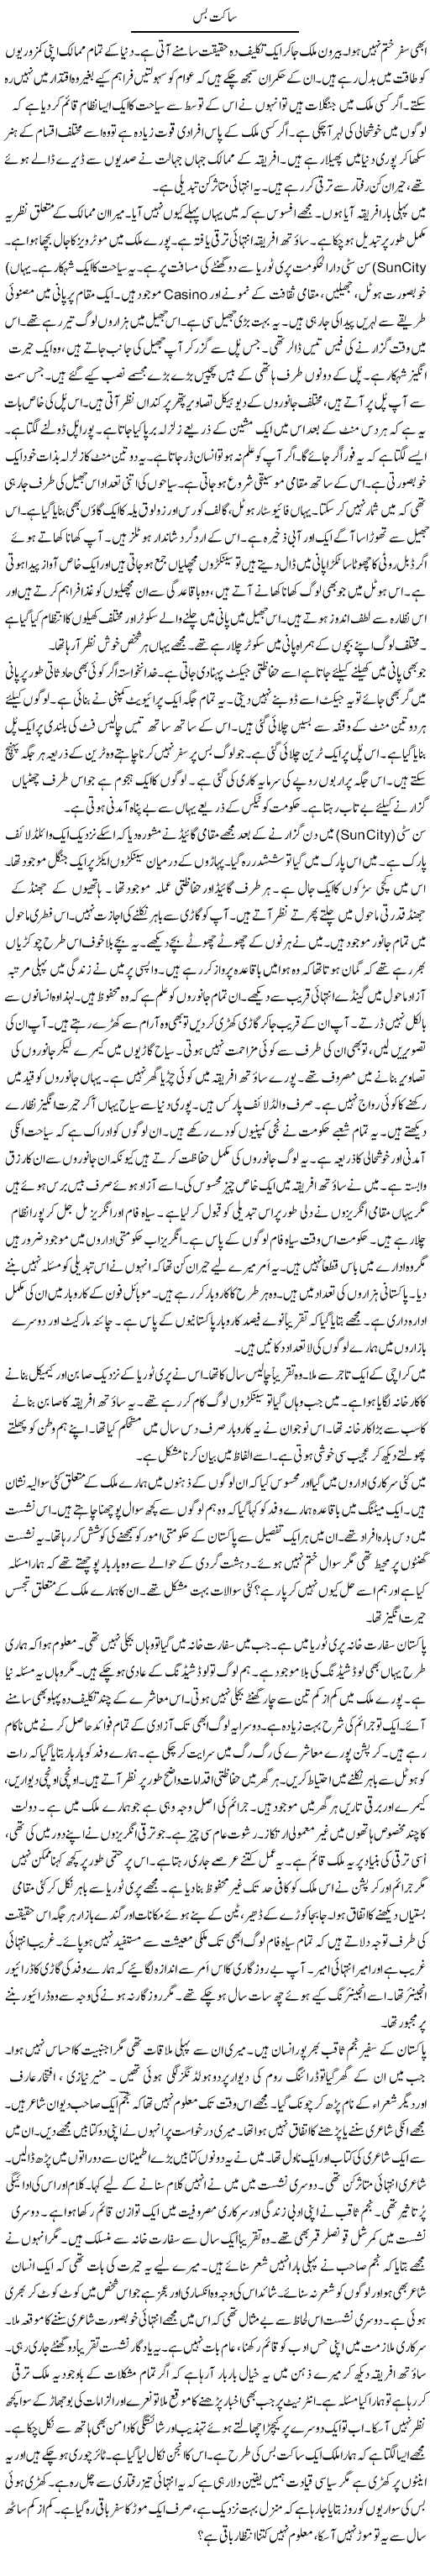 Saakit Bus | Rao Manzar Hayat | Daily Urdu Columns